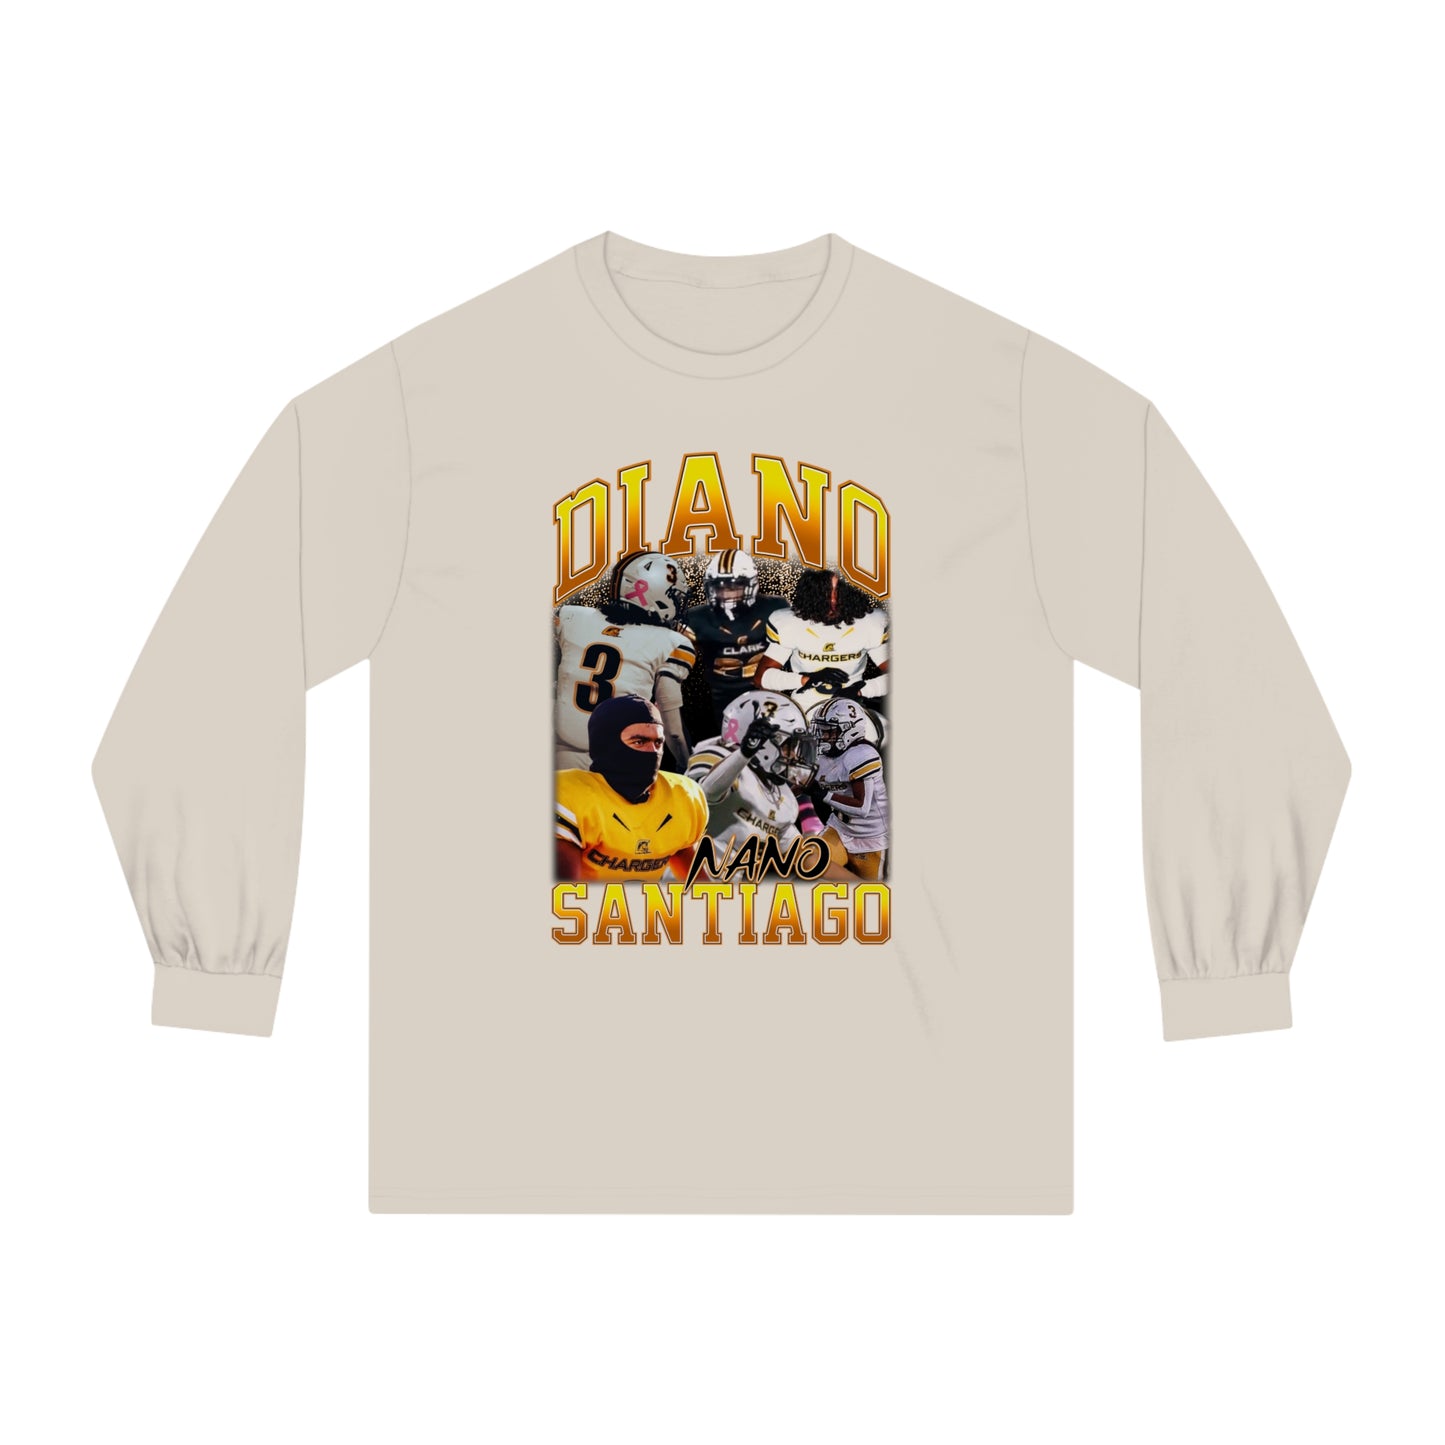 Diano Santiago Long Sleeve T-Shirt